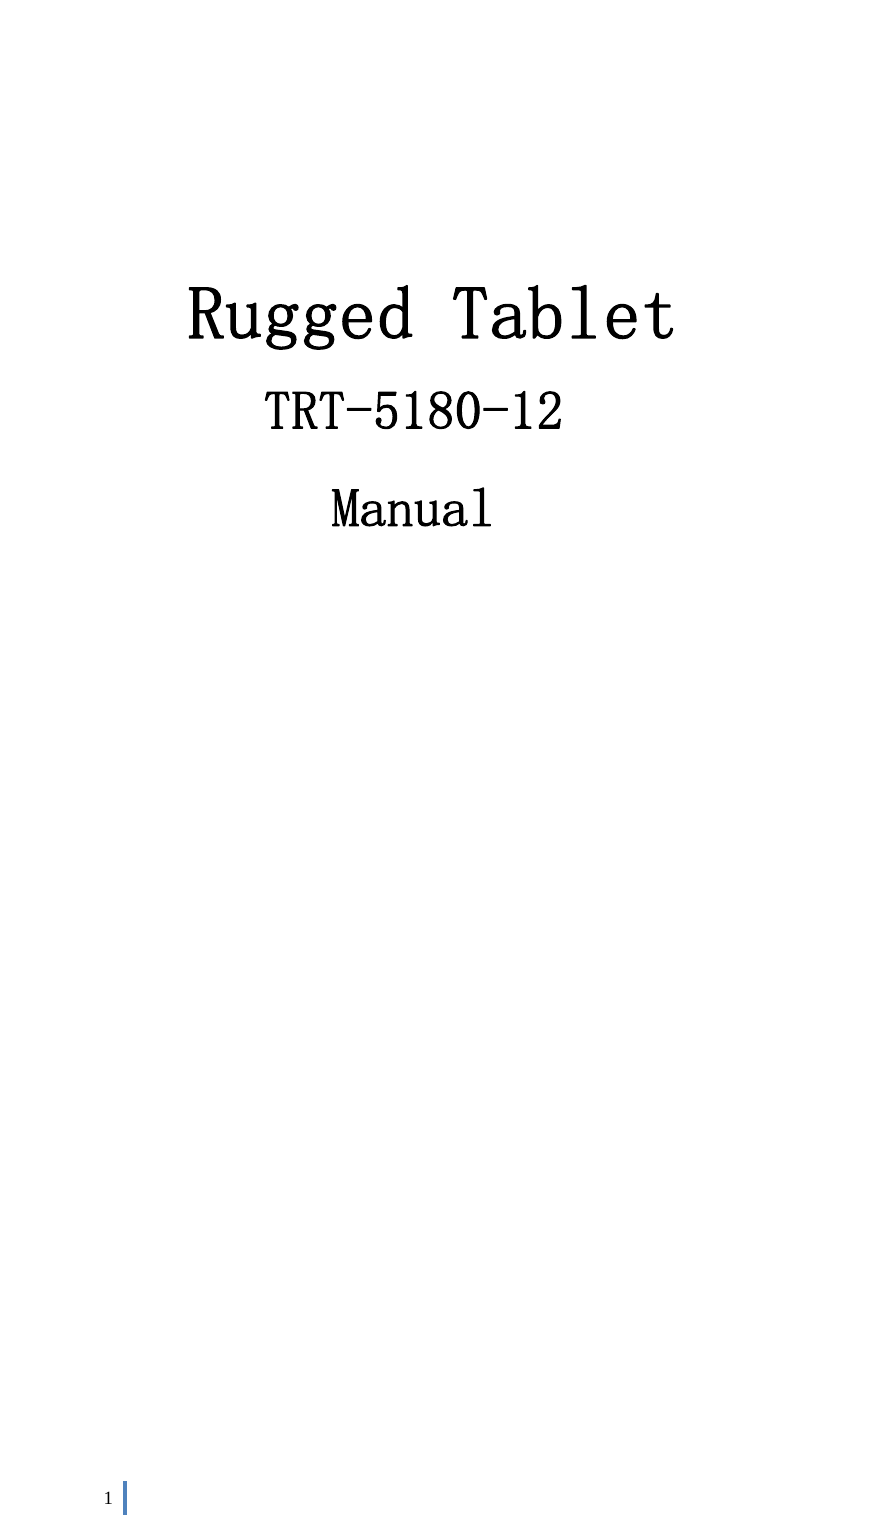  1            Rugged Tablet TRT-5180-12   Manual                             